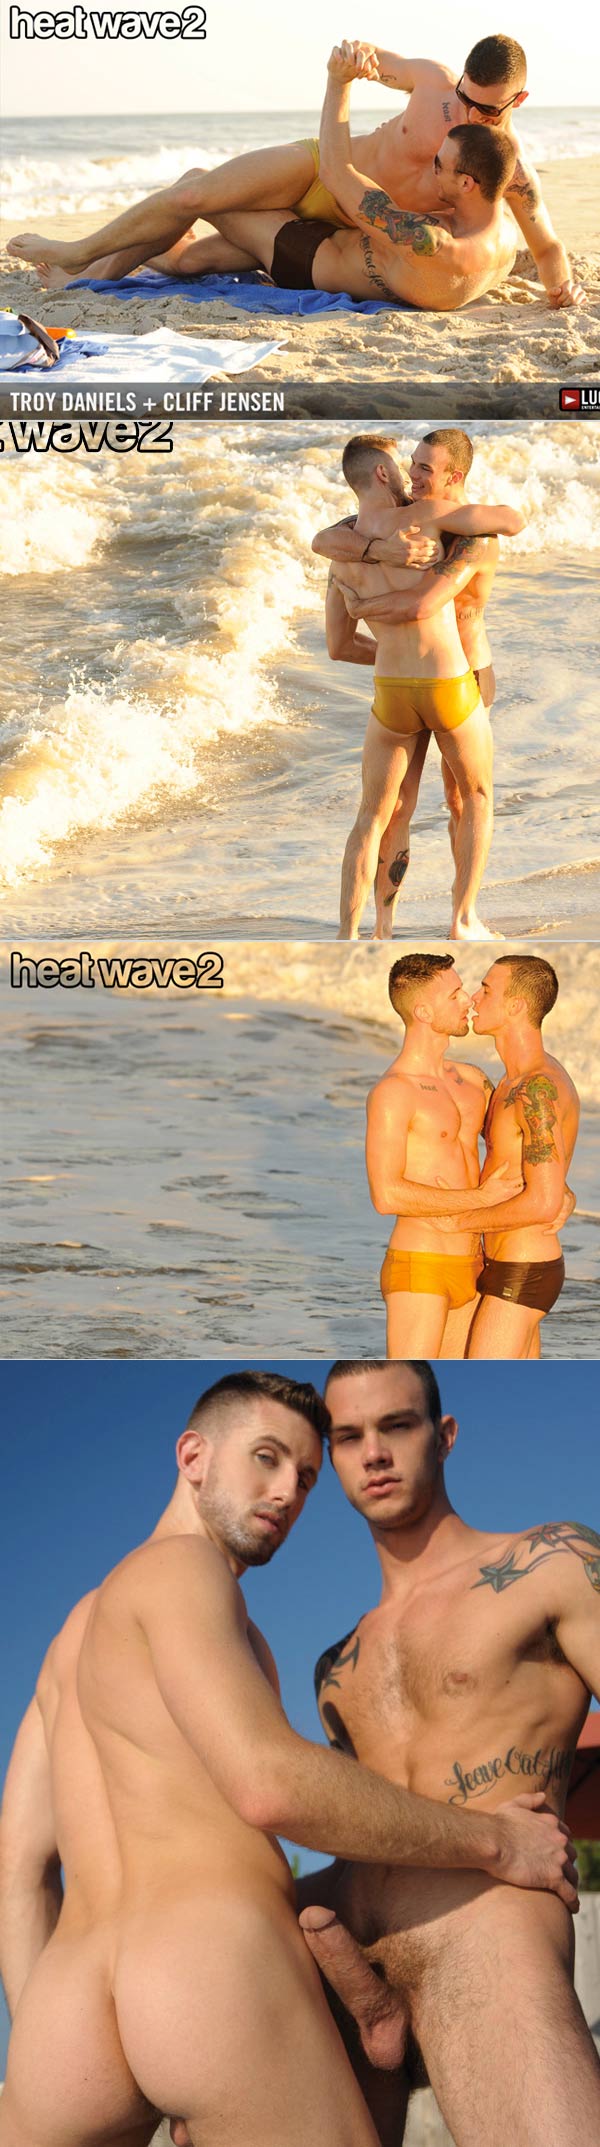 Heat Wave 2 (Cliff Jensen & Troy Daniels) at LucasEntertainment.com